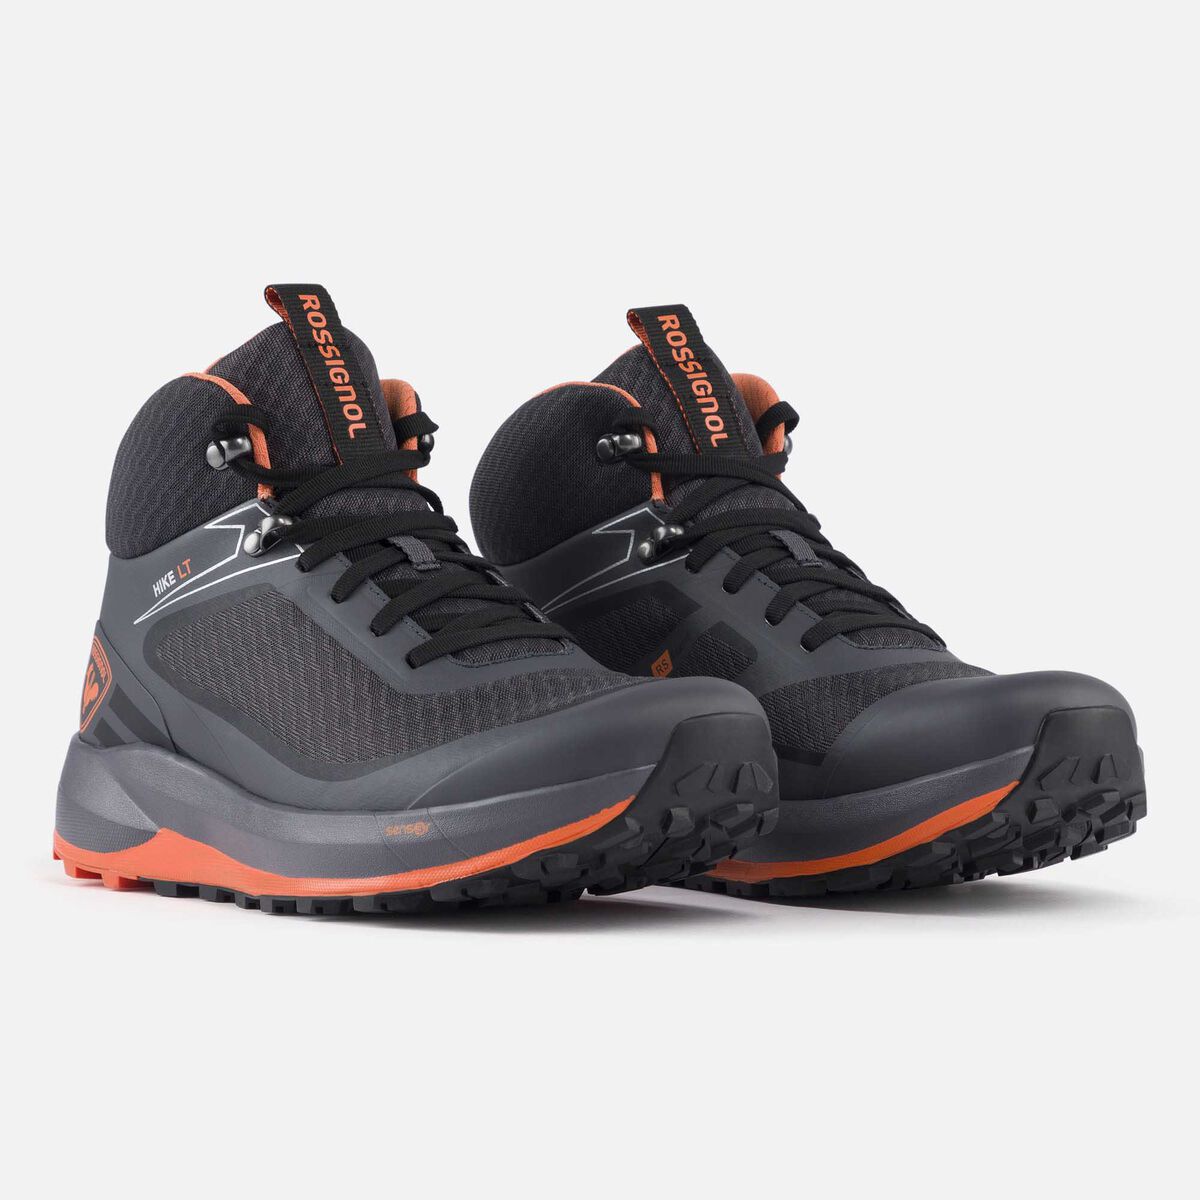 Rossignol Men's dark grey lightweight hiking shoes grey